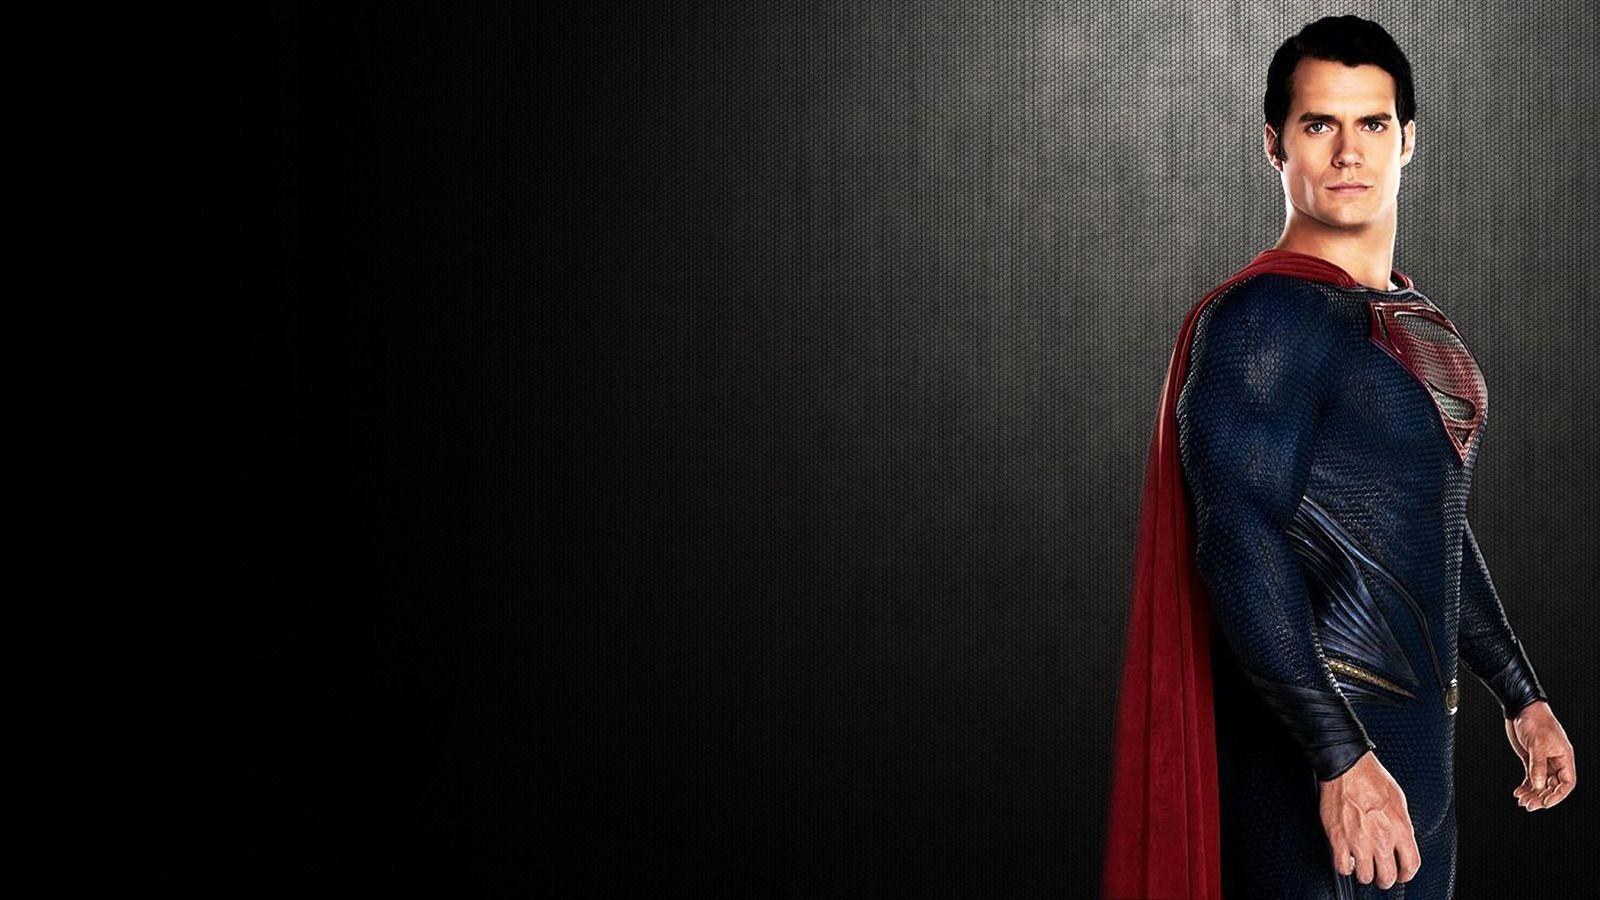 image For > Superman Man Of Steel Wallpaper HD 1920x1080